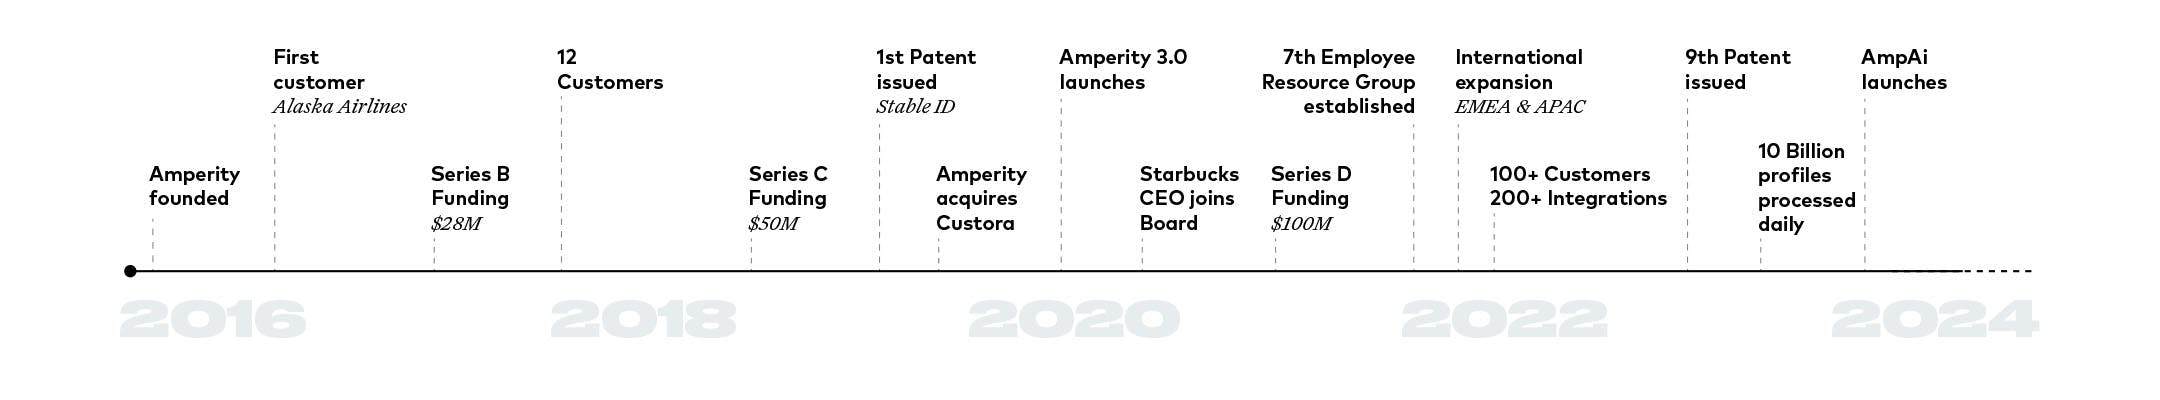 A horizontal timeline of Amperity's important company milestones